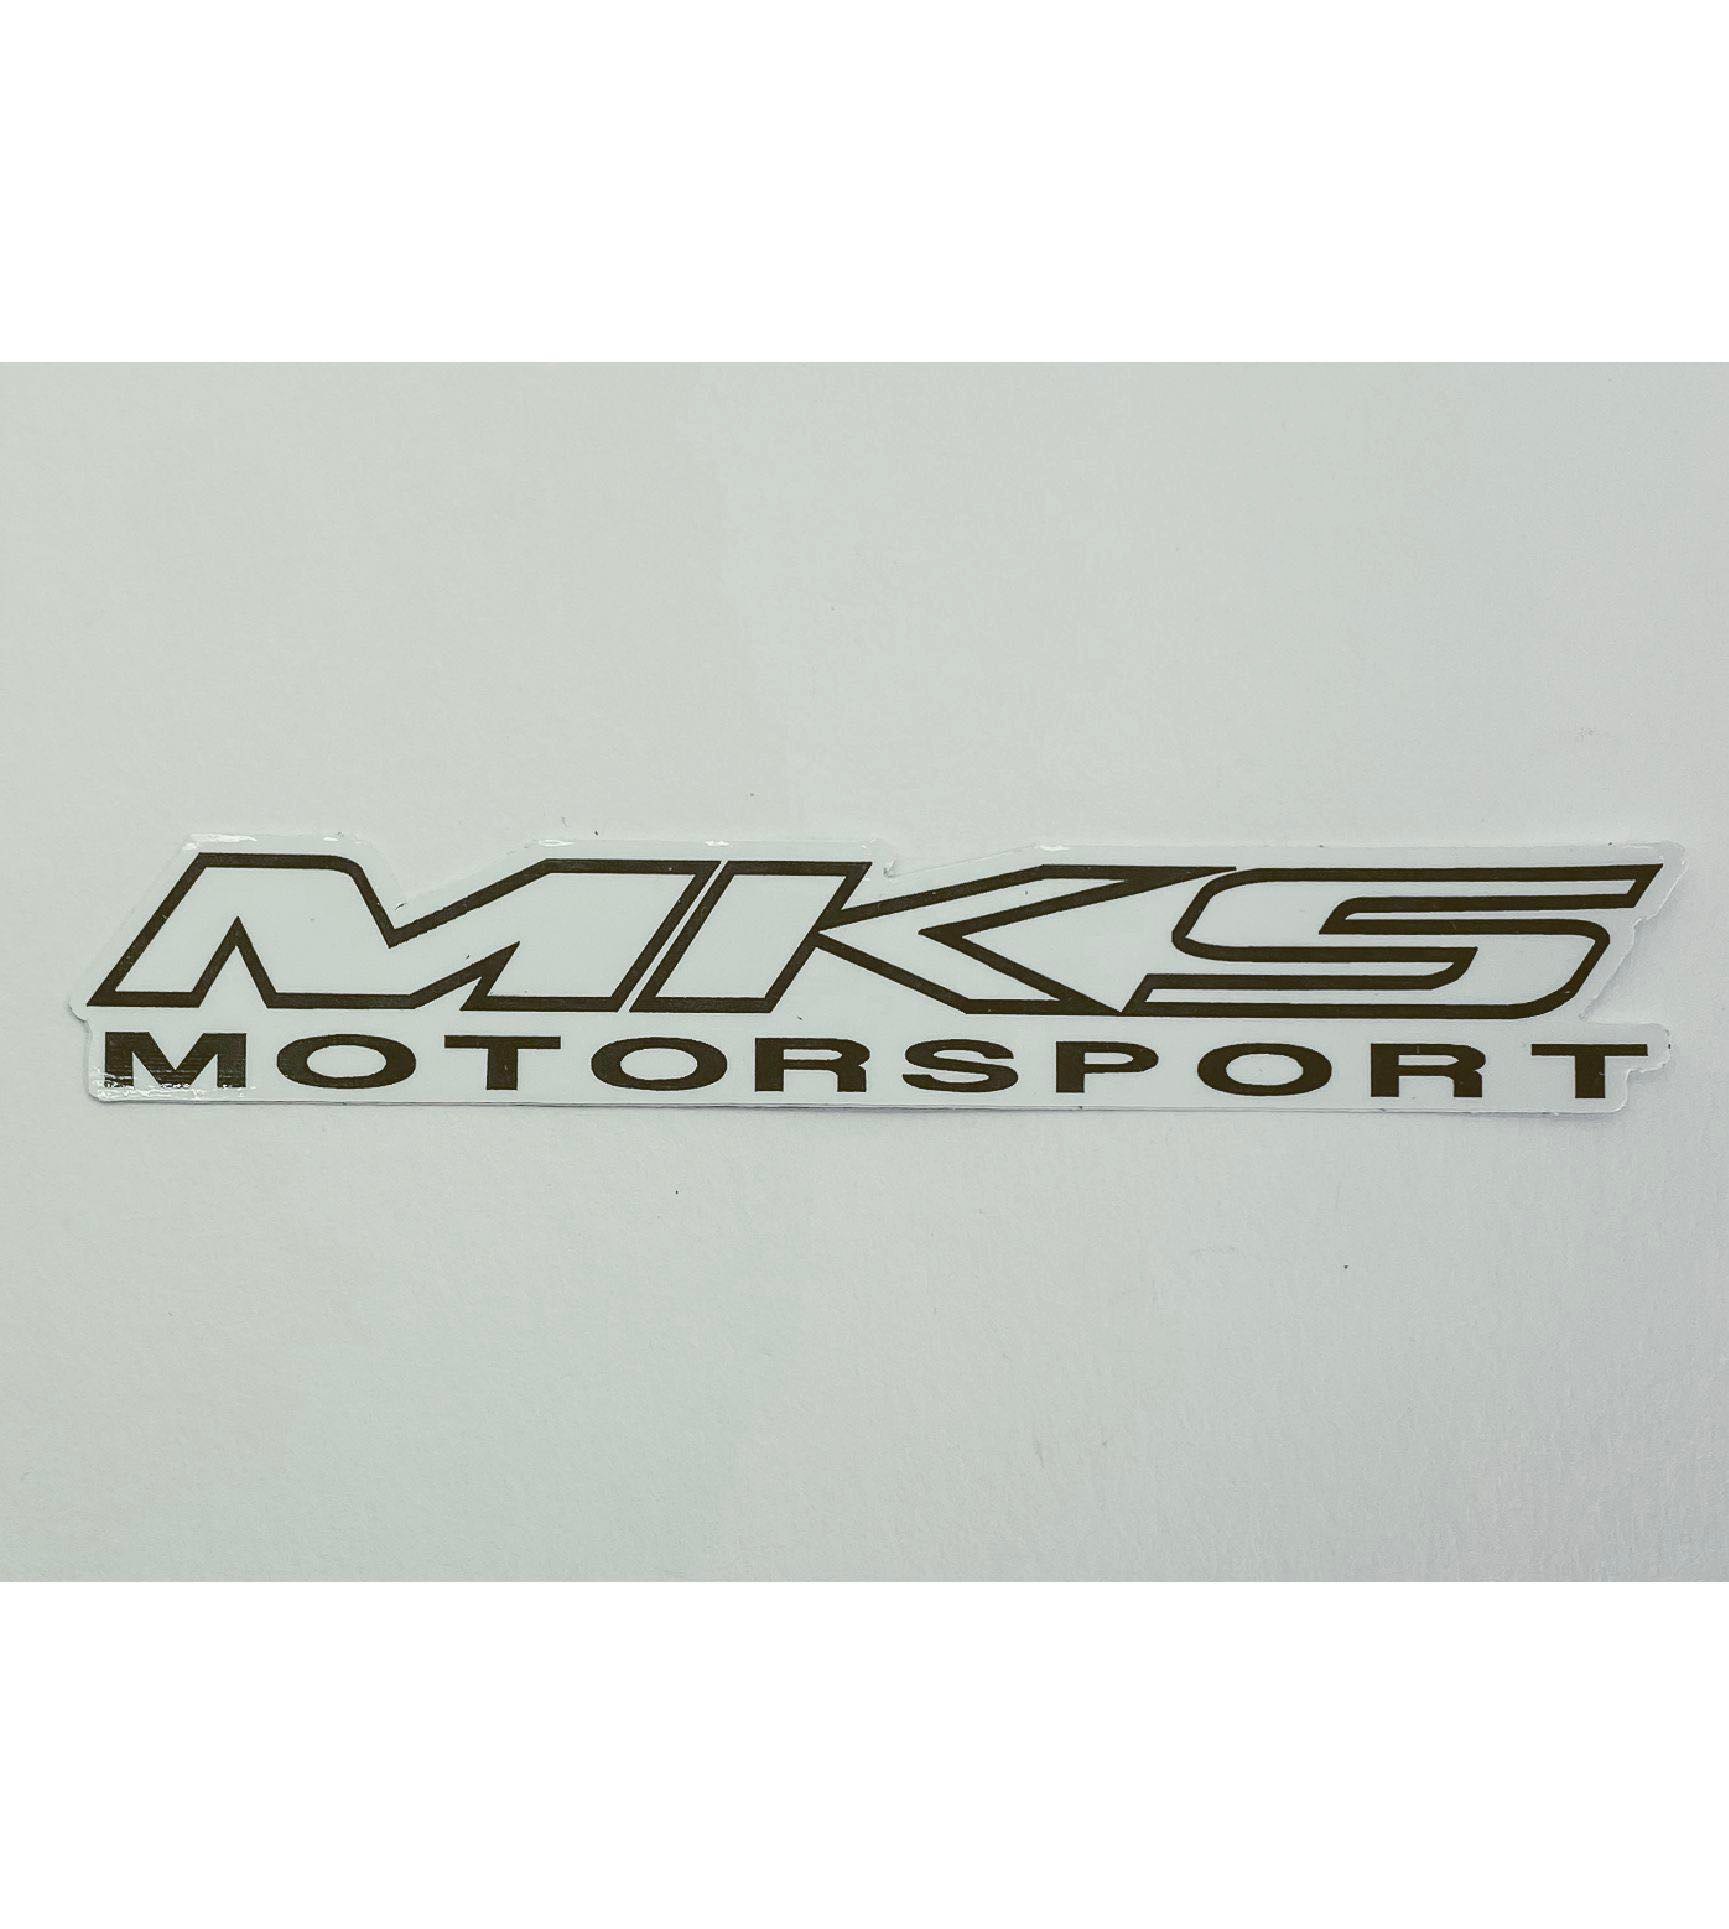 MKS Motorsport Sticker - MKS Motorsport